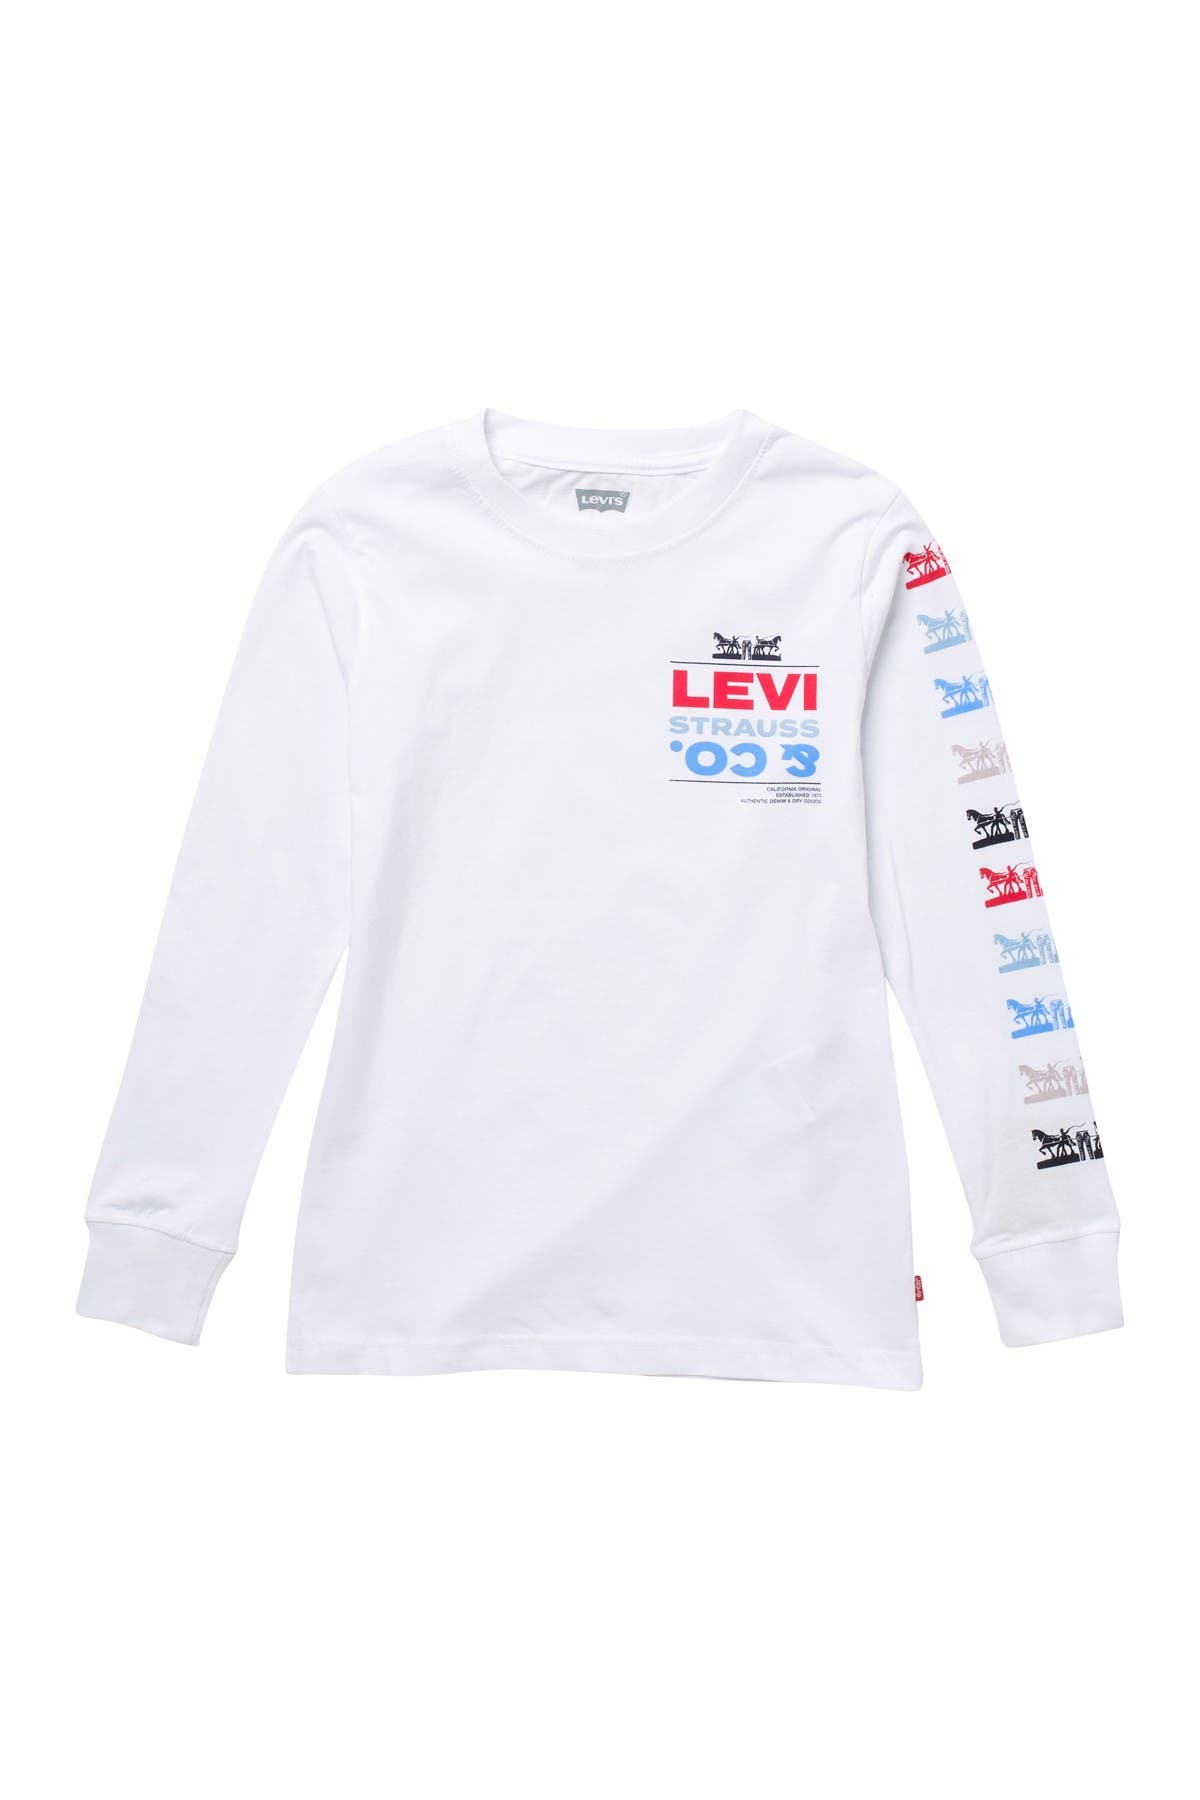 Levi's | Strauss Co Long Sleeve T-Shirt 